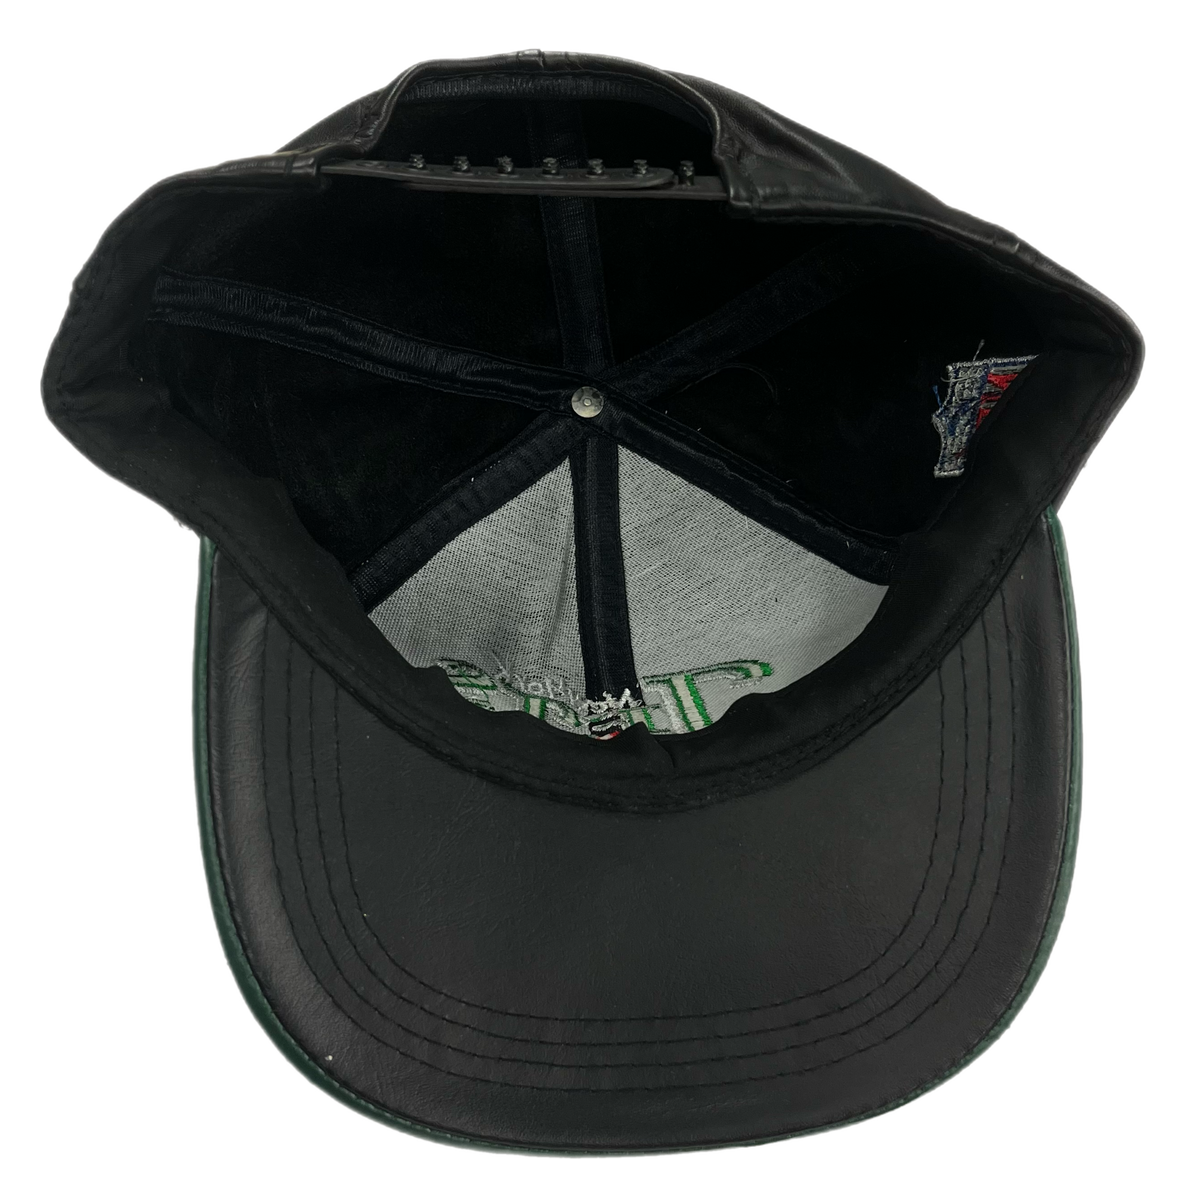 Vintage New York Jets &quot;NFL&quot; Leather Snapback Hat